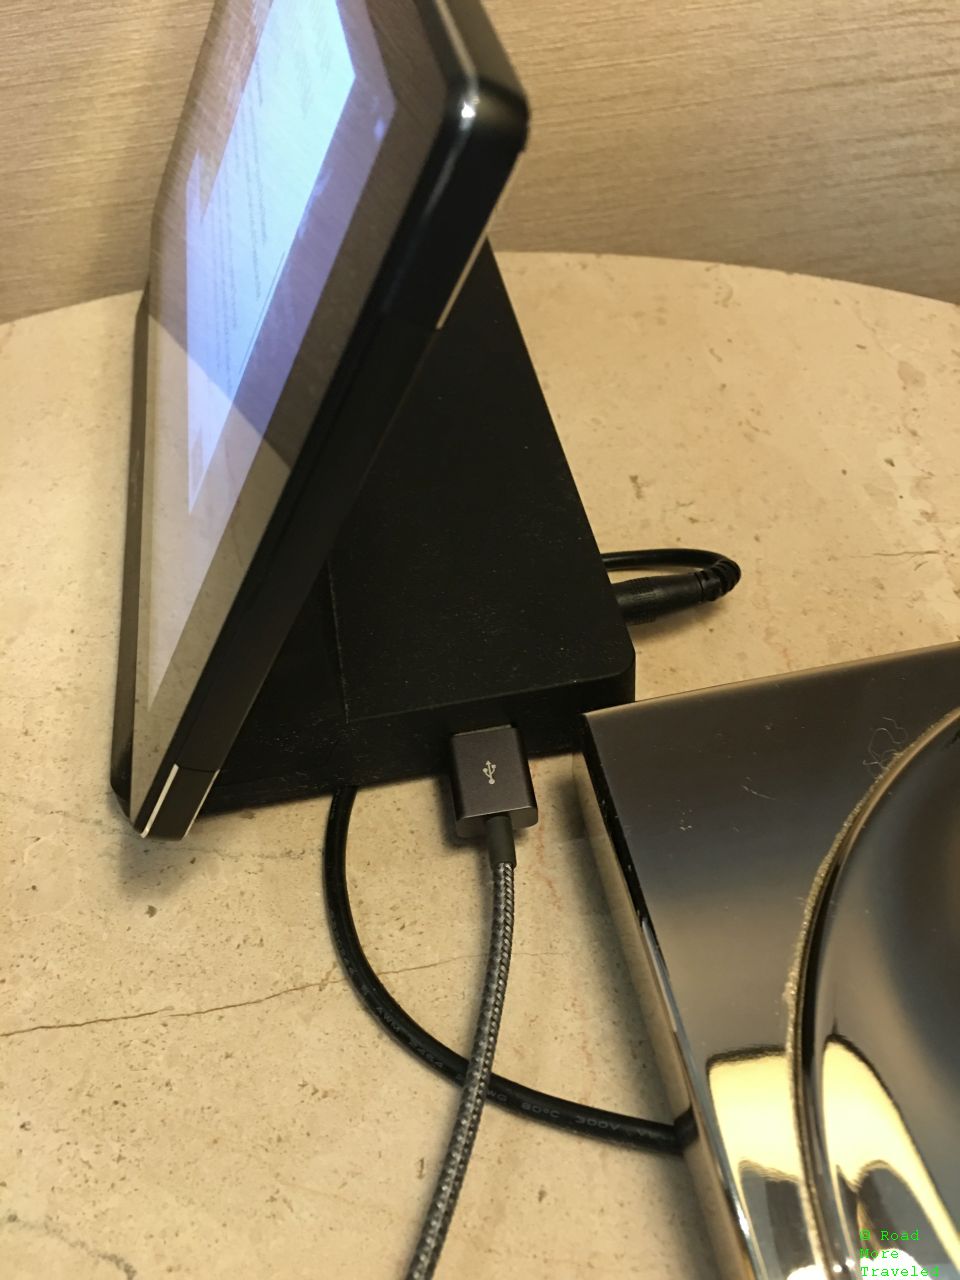 Palais Hansen Kempinski tablet and USB port